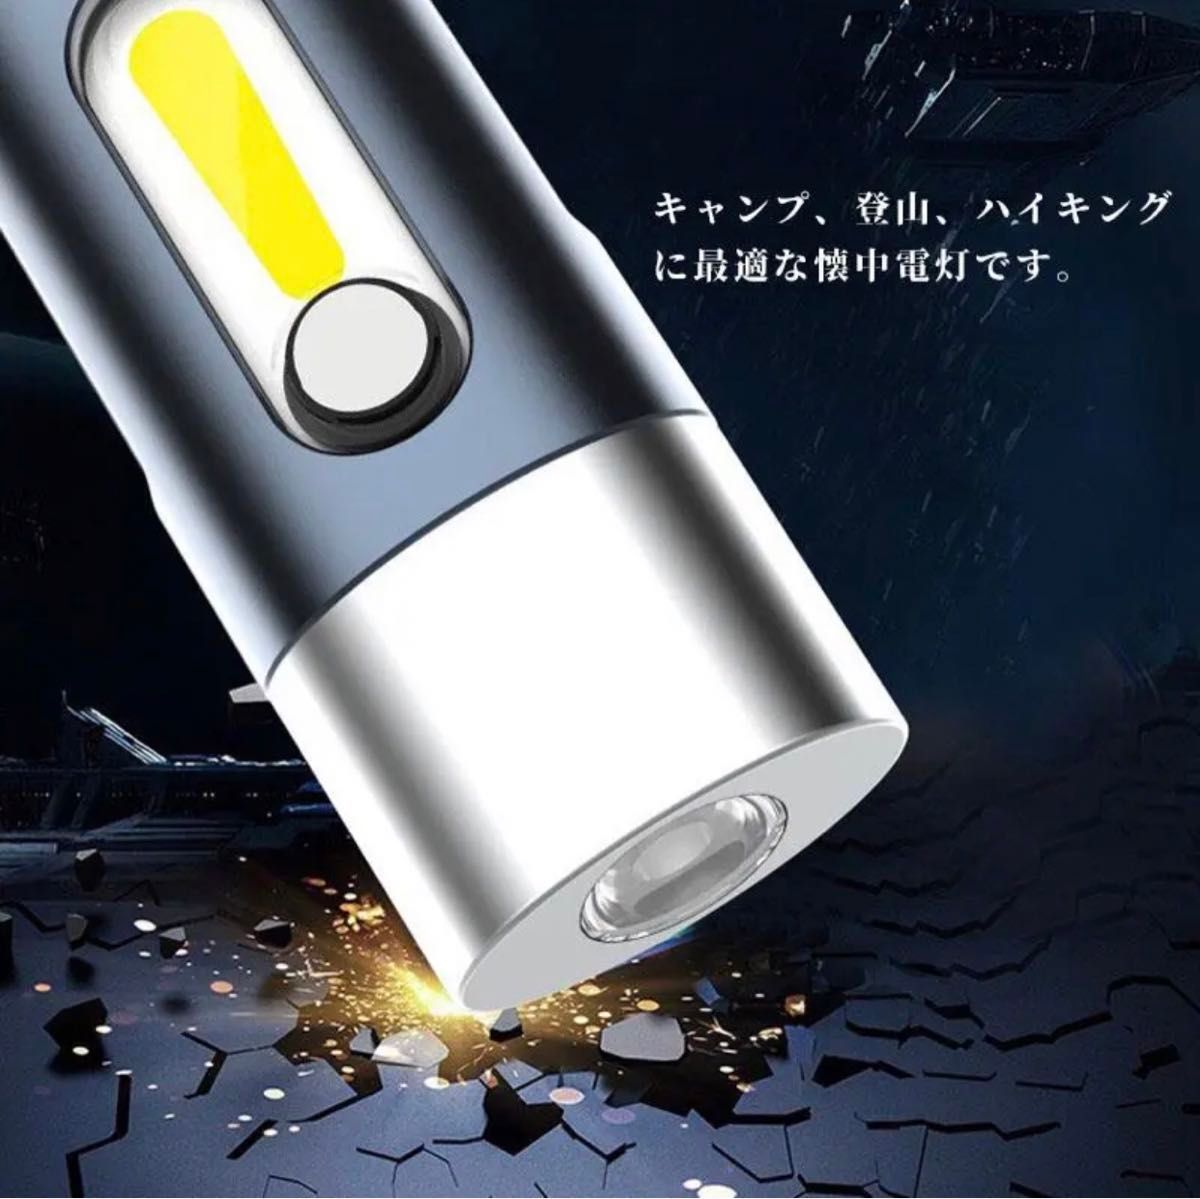 LED 懐中電灯 USB充電式 コンパクト 防水 強力 小型 ライト COB